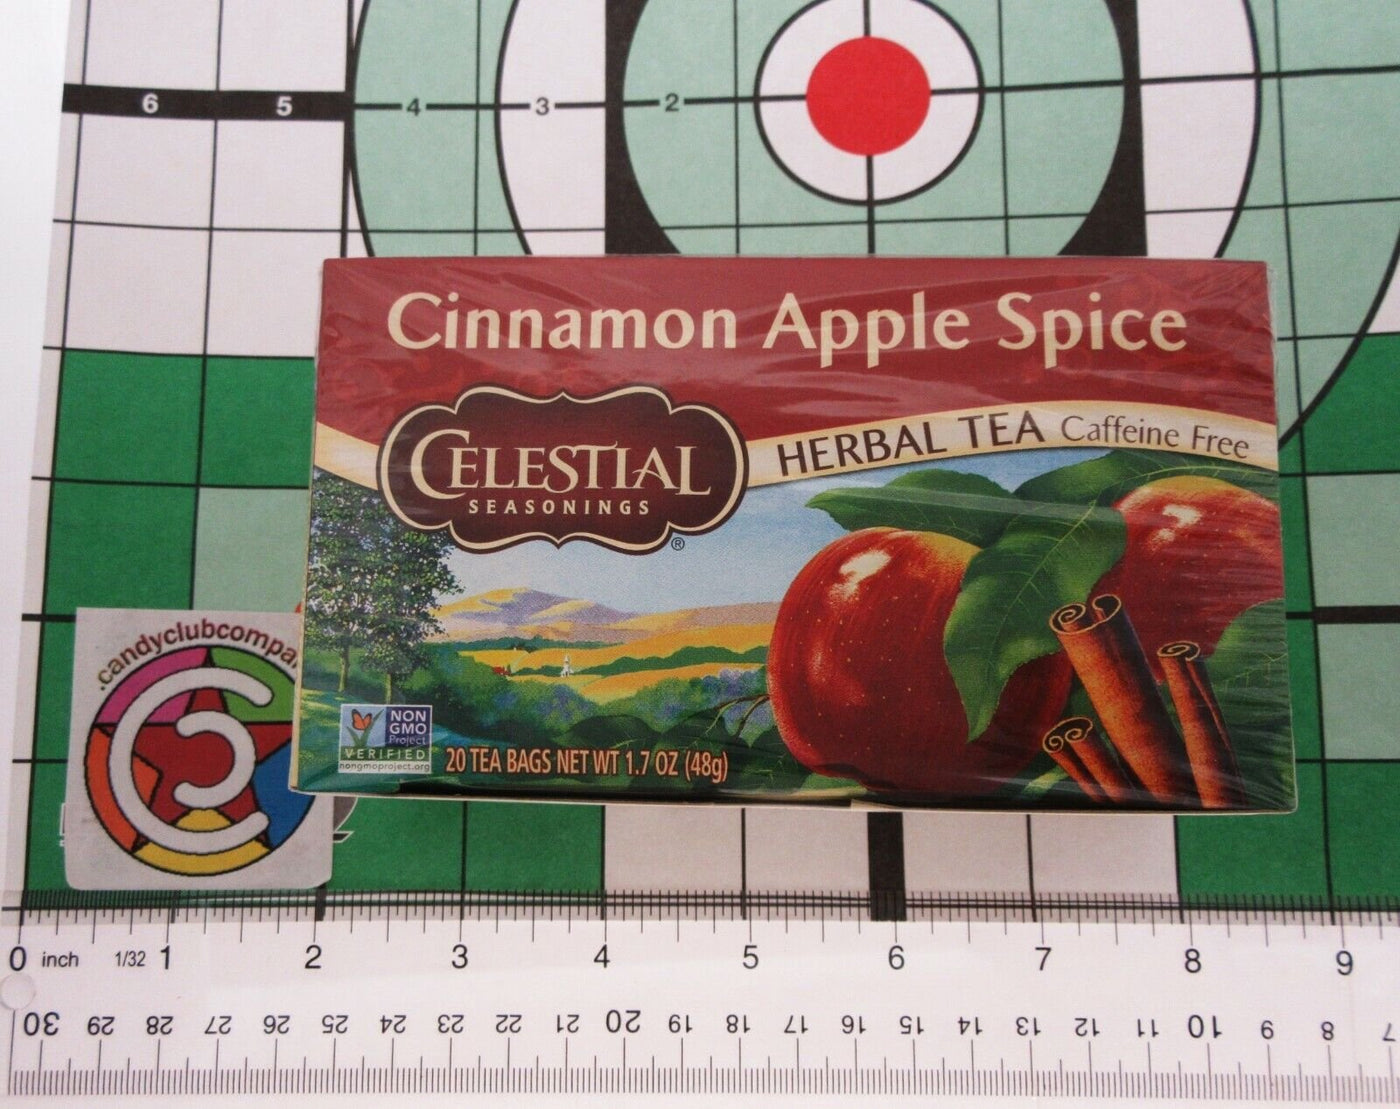 Celestial Cinnamon Apple Spice Herbal Tea 20 bags each ~ Lot of 2